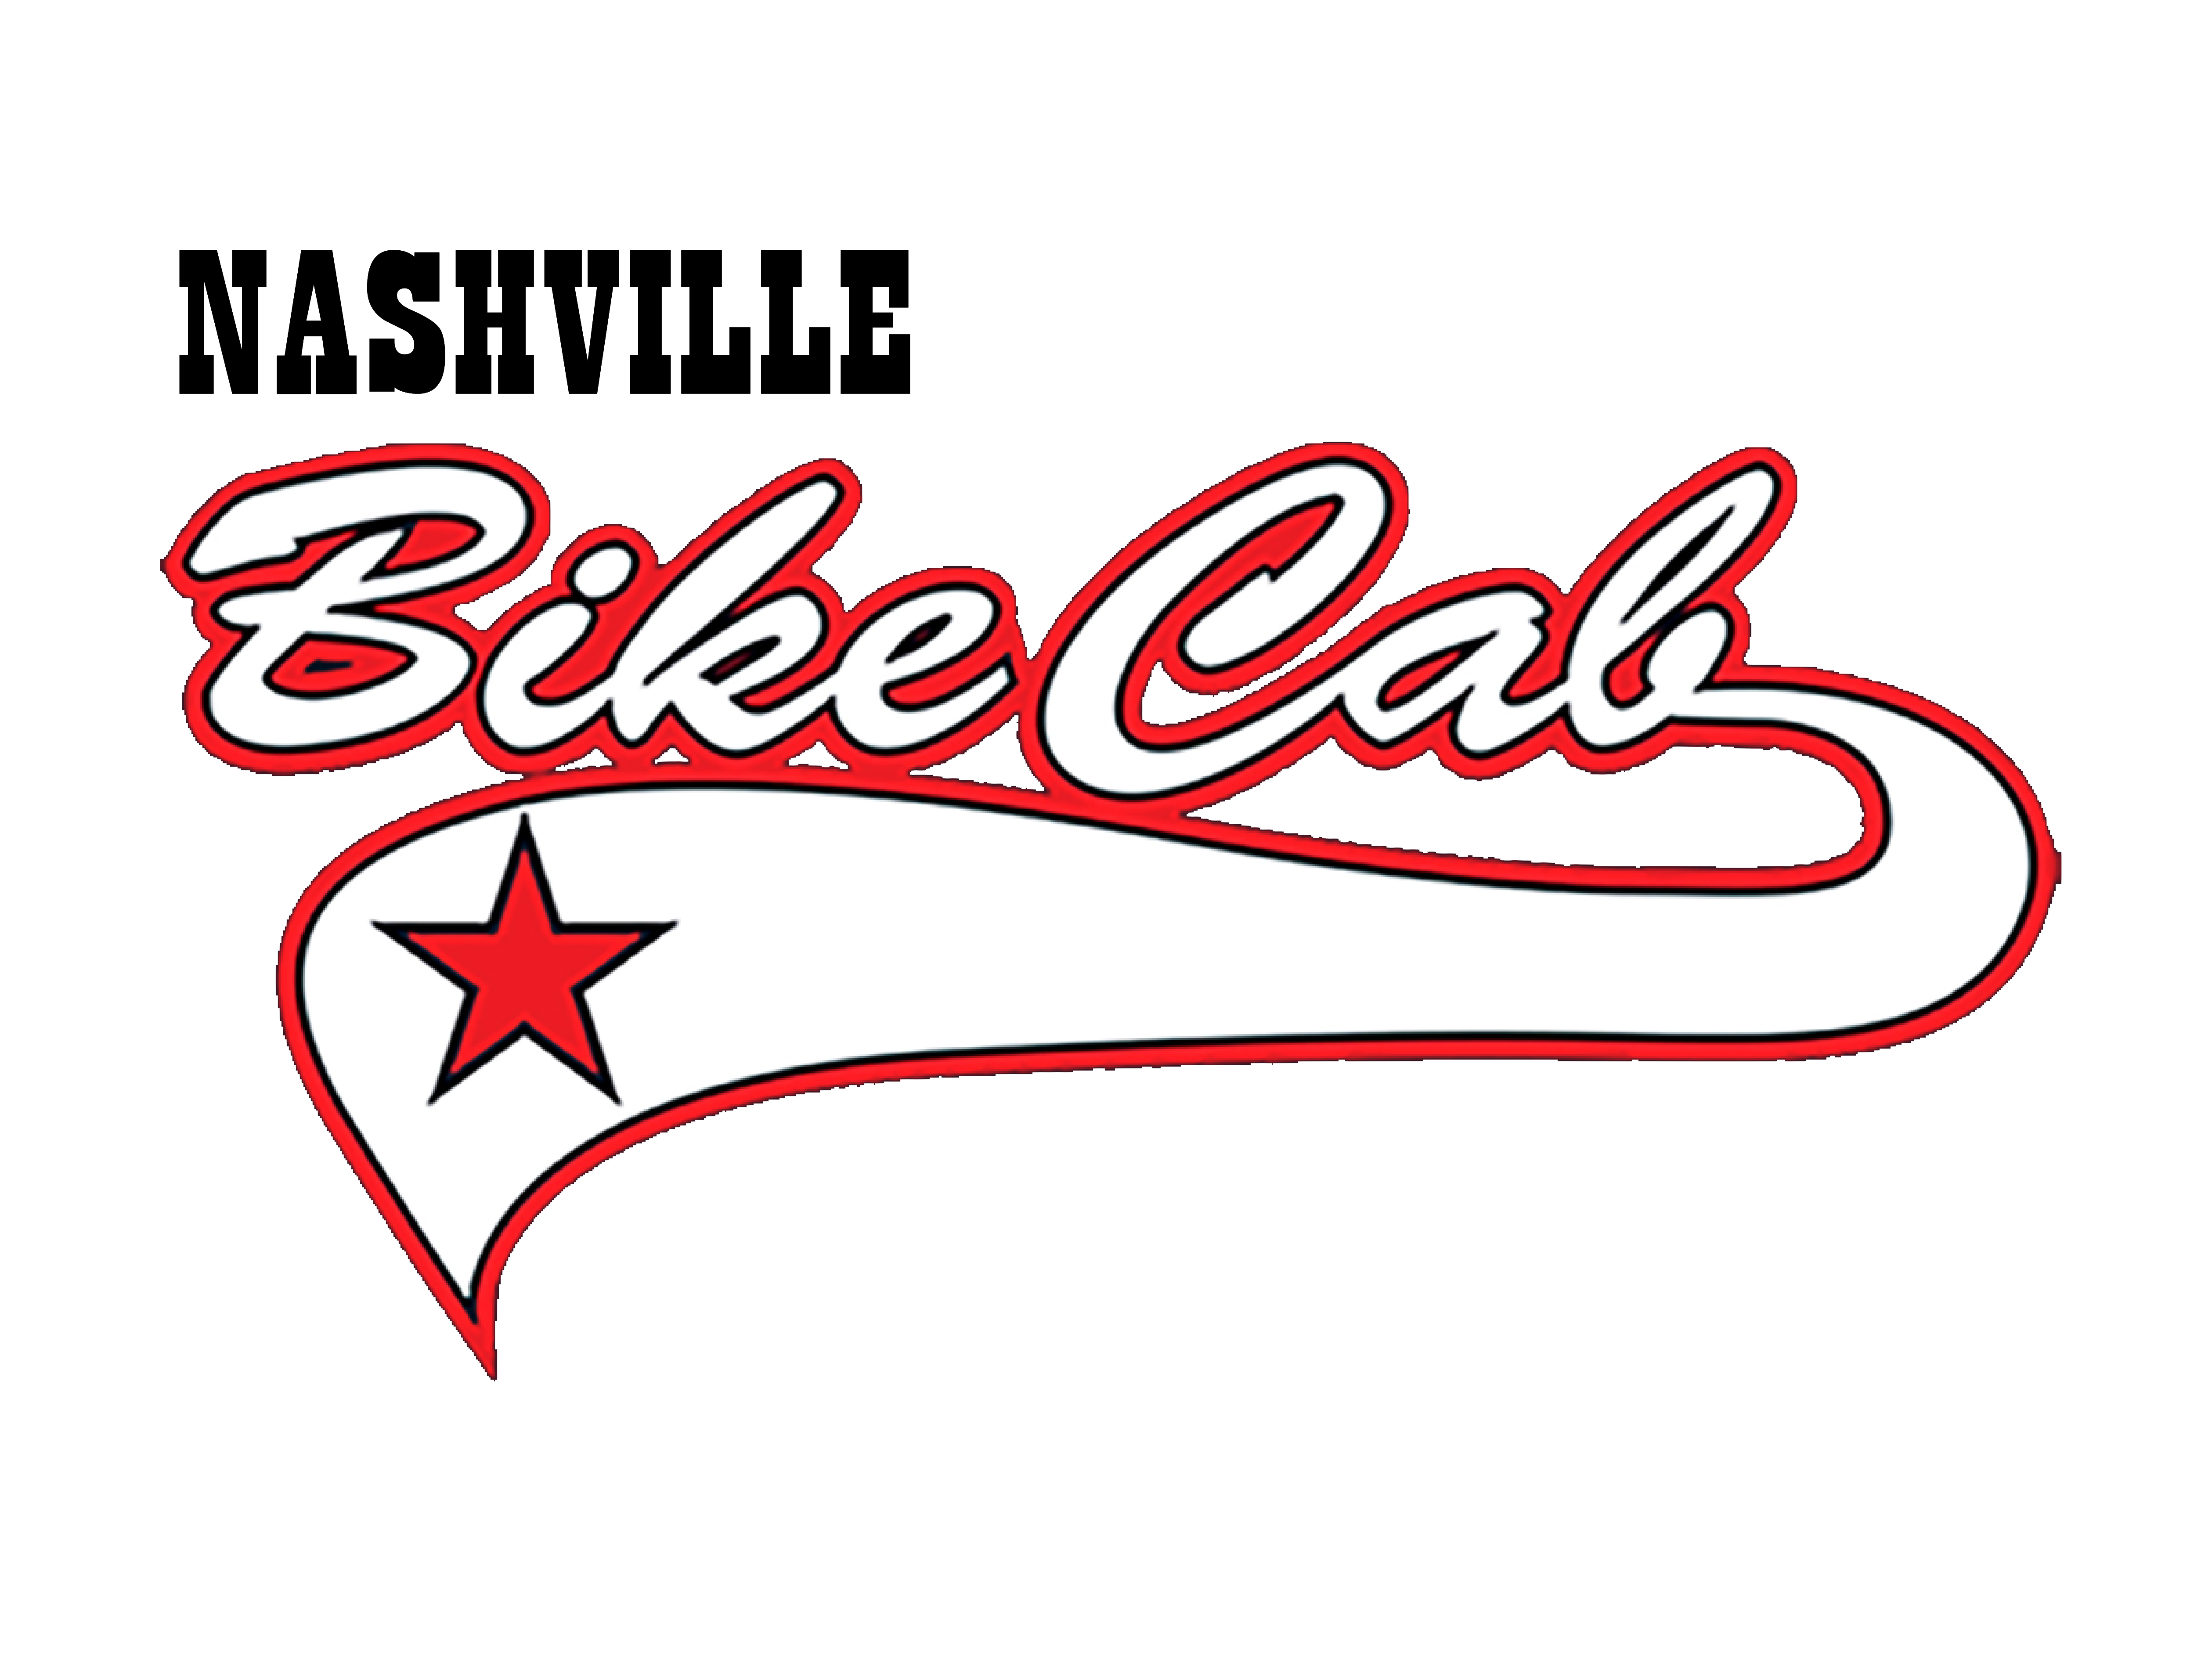 Nashville Bike Cab